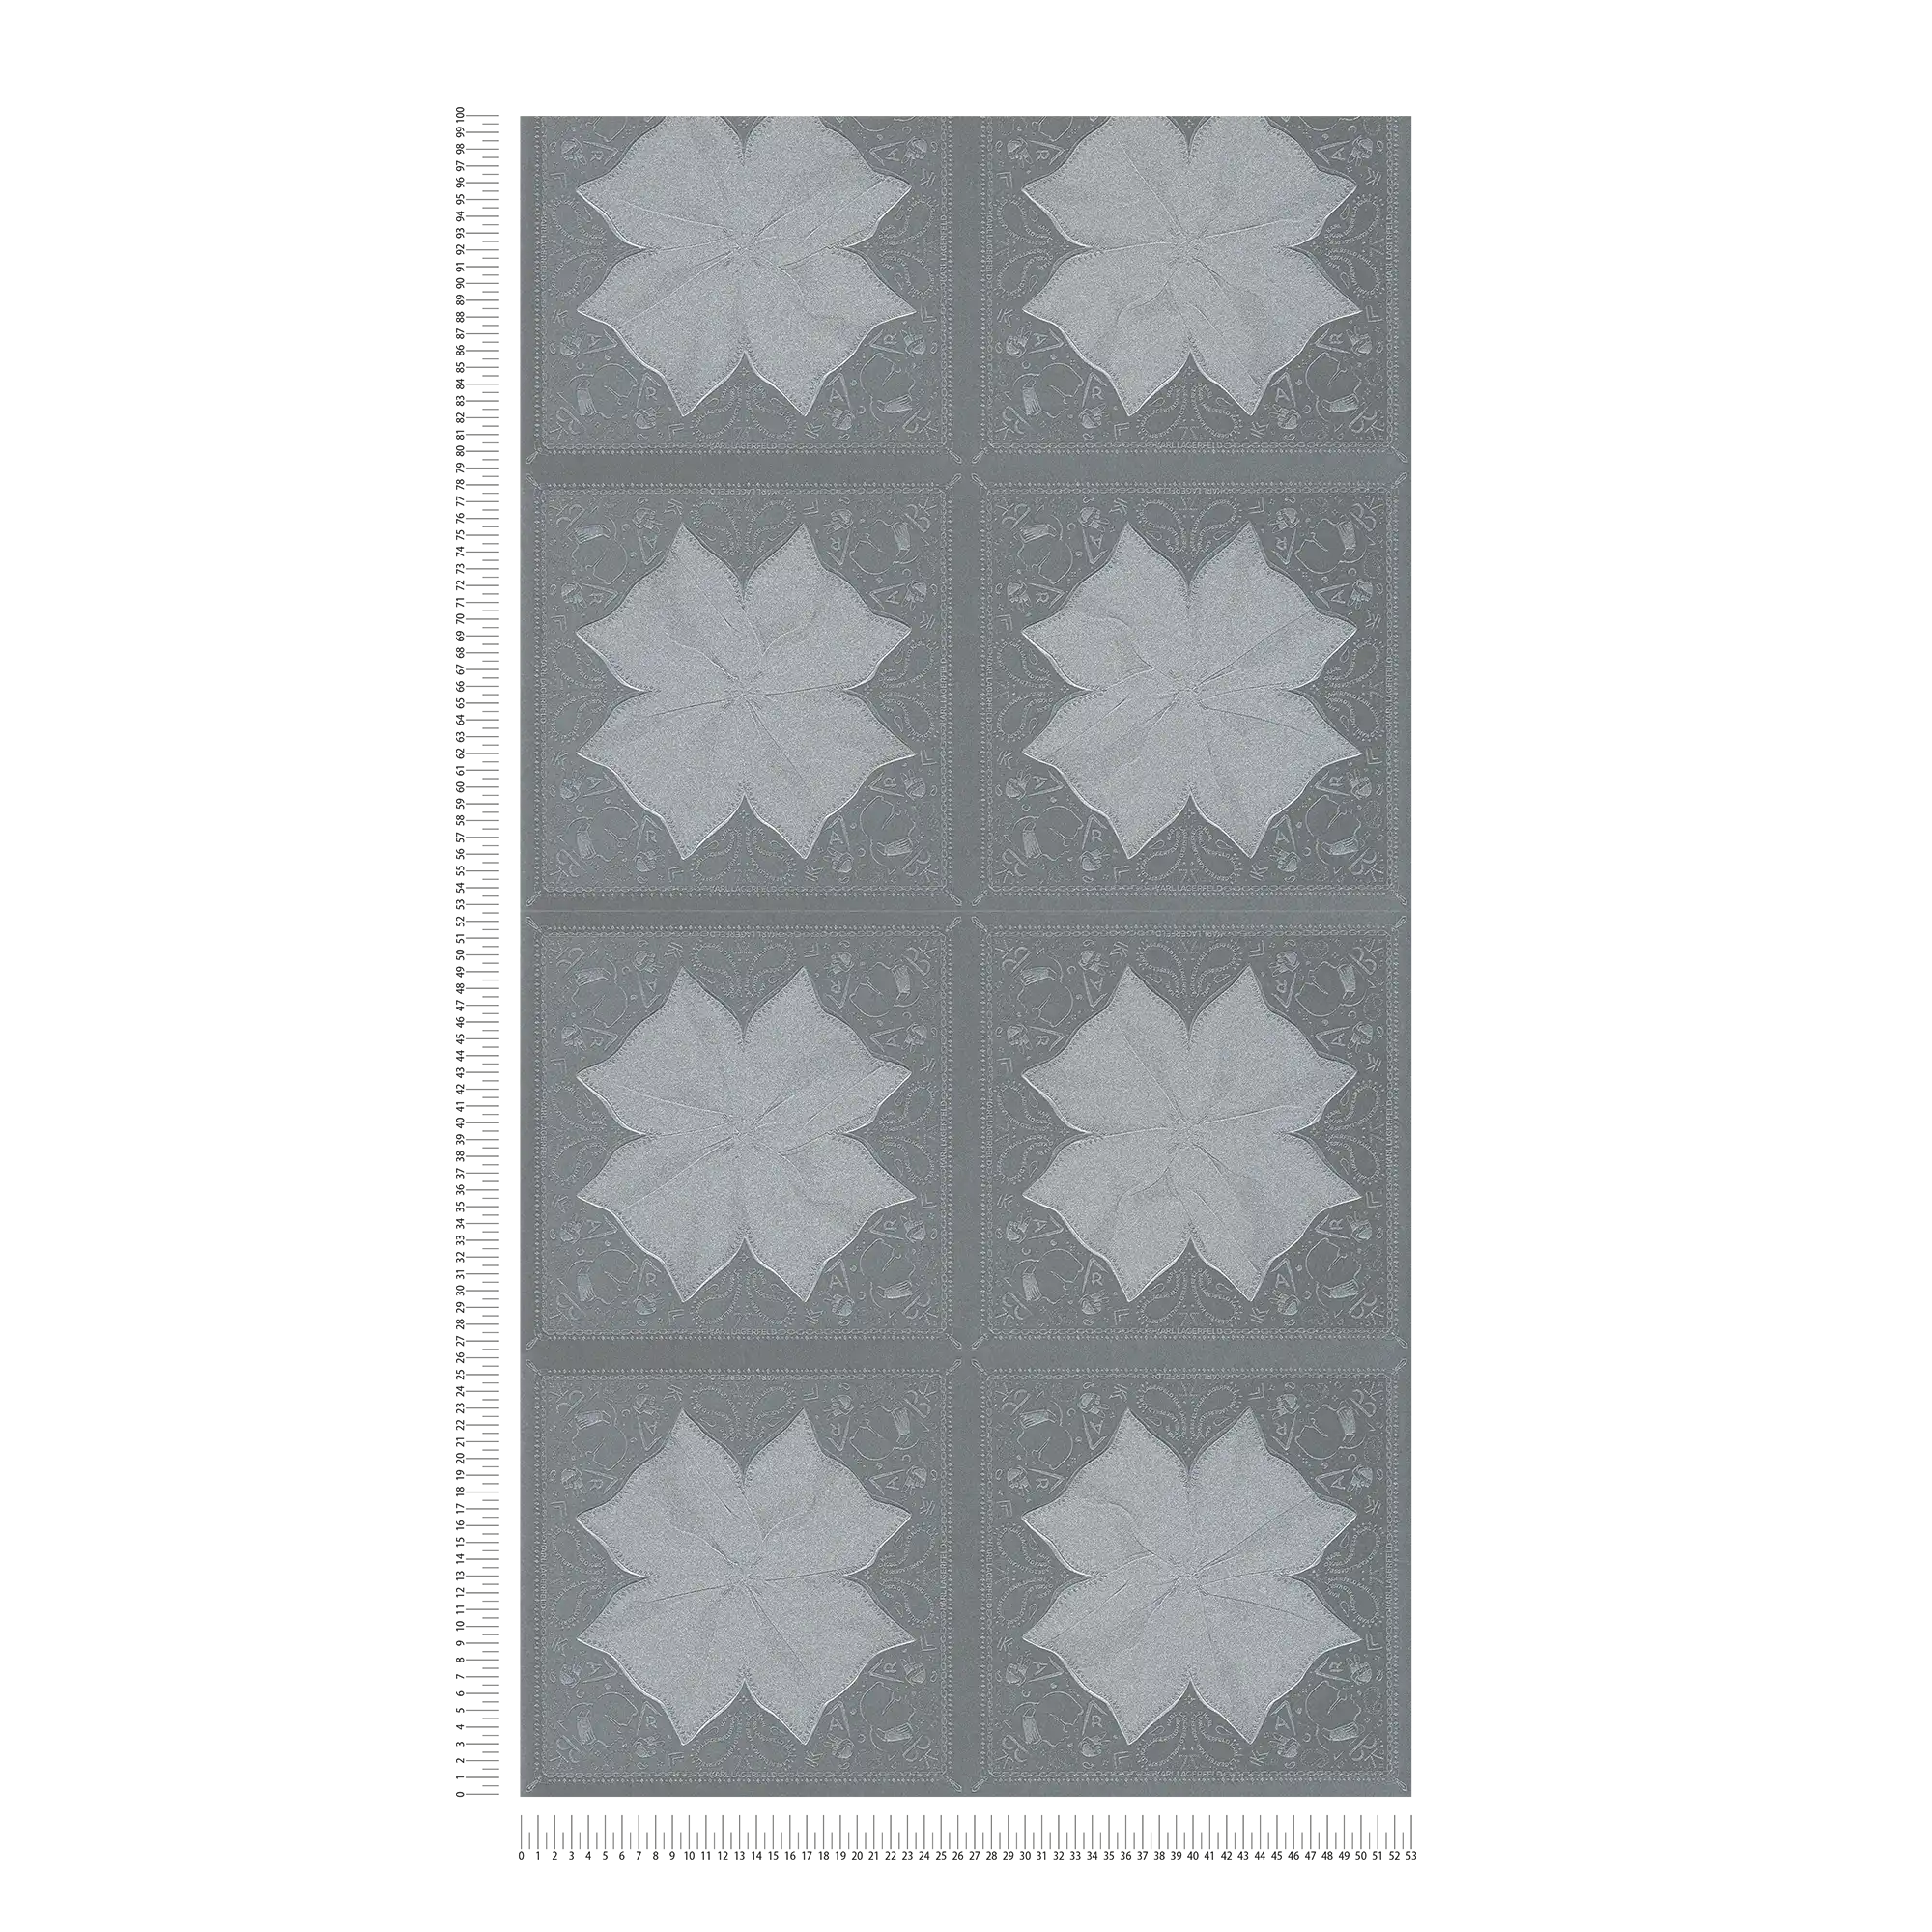             Karl LAGERFELD Tie Pattern Behang - Grijs, Metallic
        